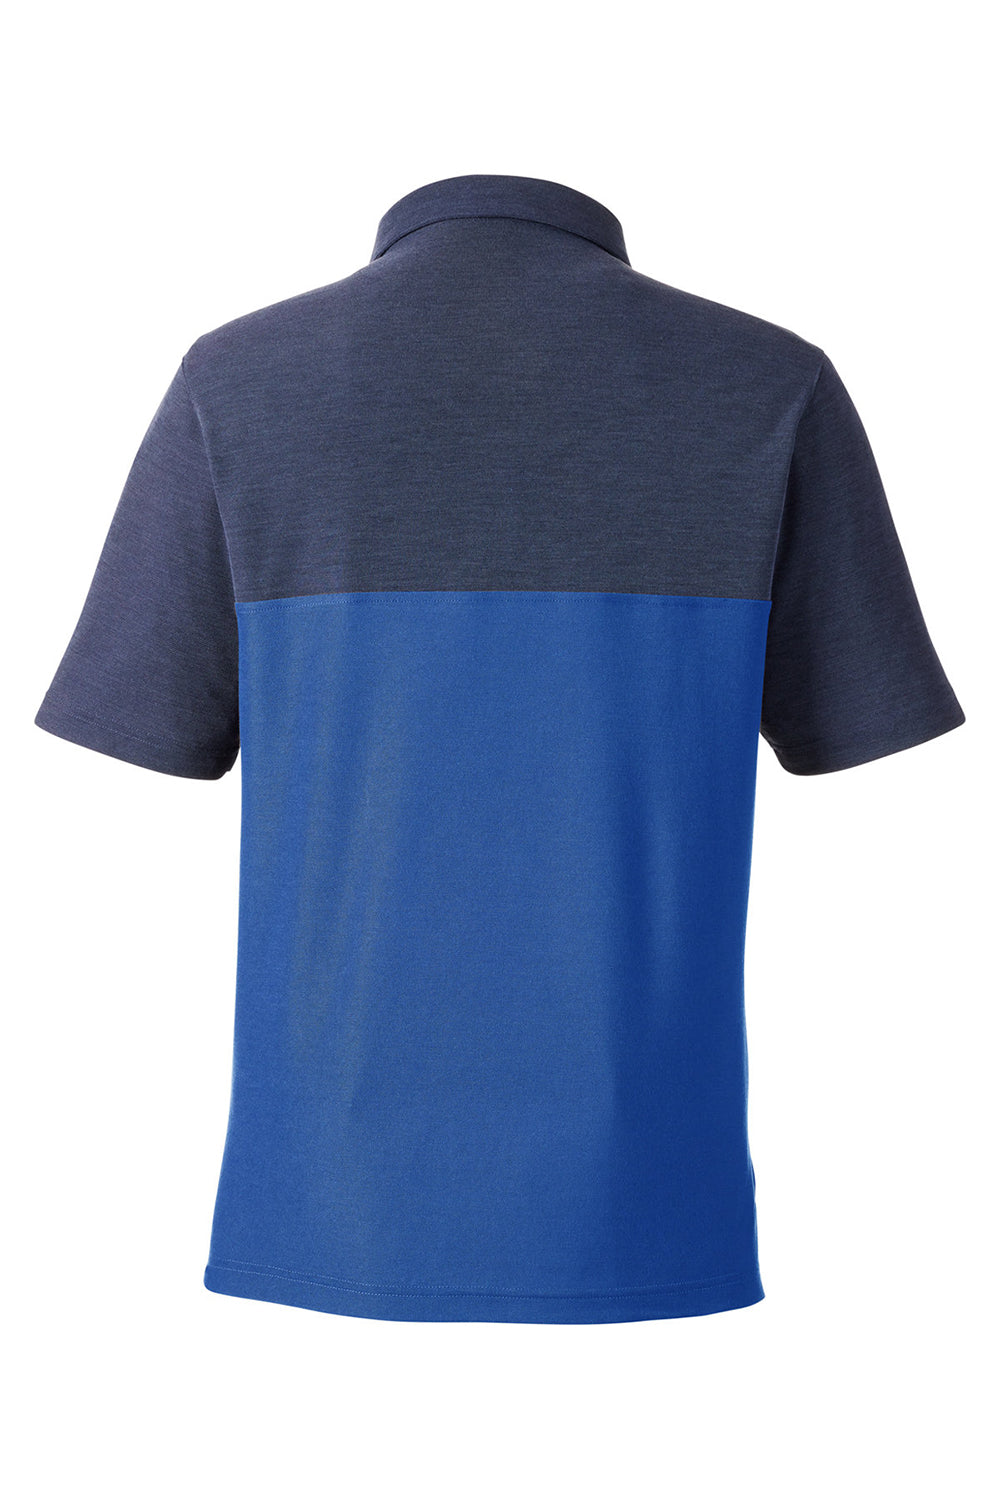 Core 365 CE112C Mens Fusion ChromaSoft Performance Moisture Wicking Colorblock Short Sleeve Polo Shirt True Royal Blue/Heather Navy Blue Flat Back